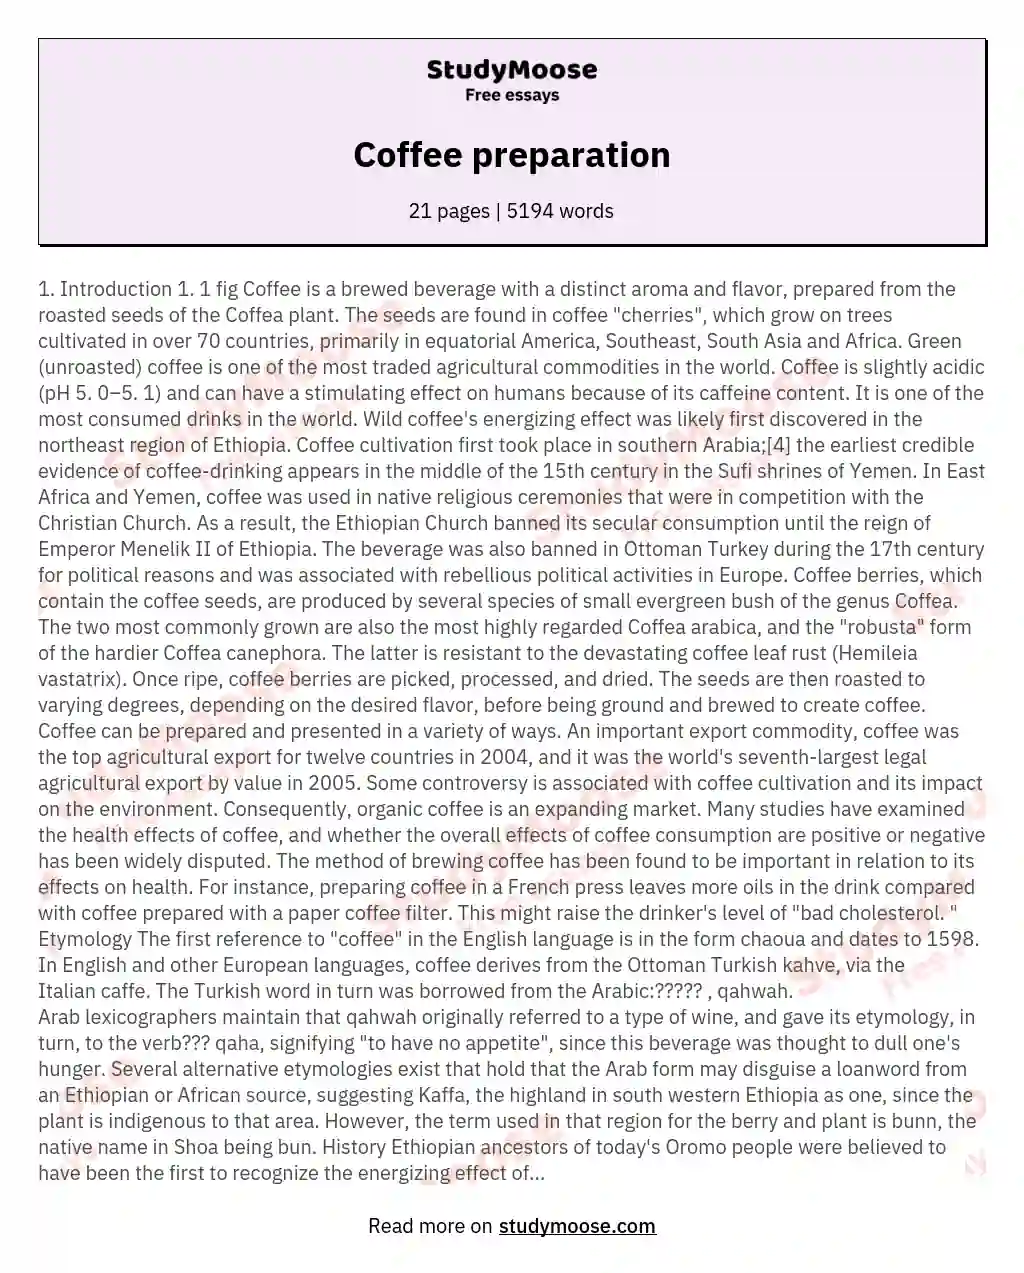 Coffee preparation essay